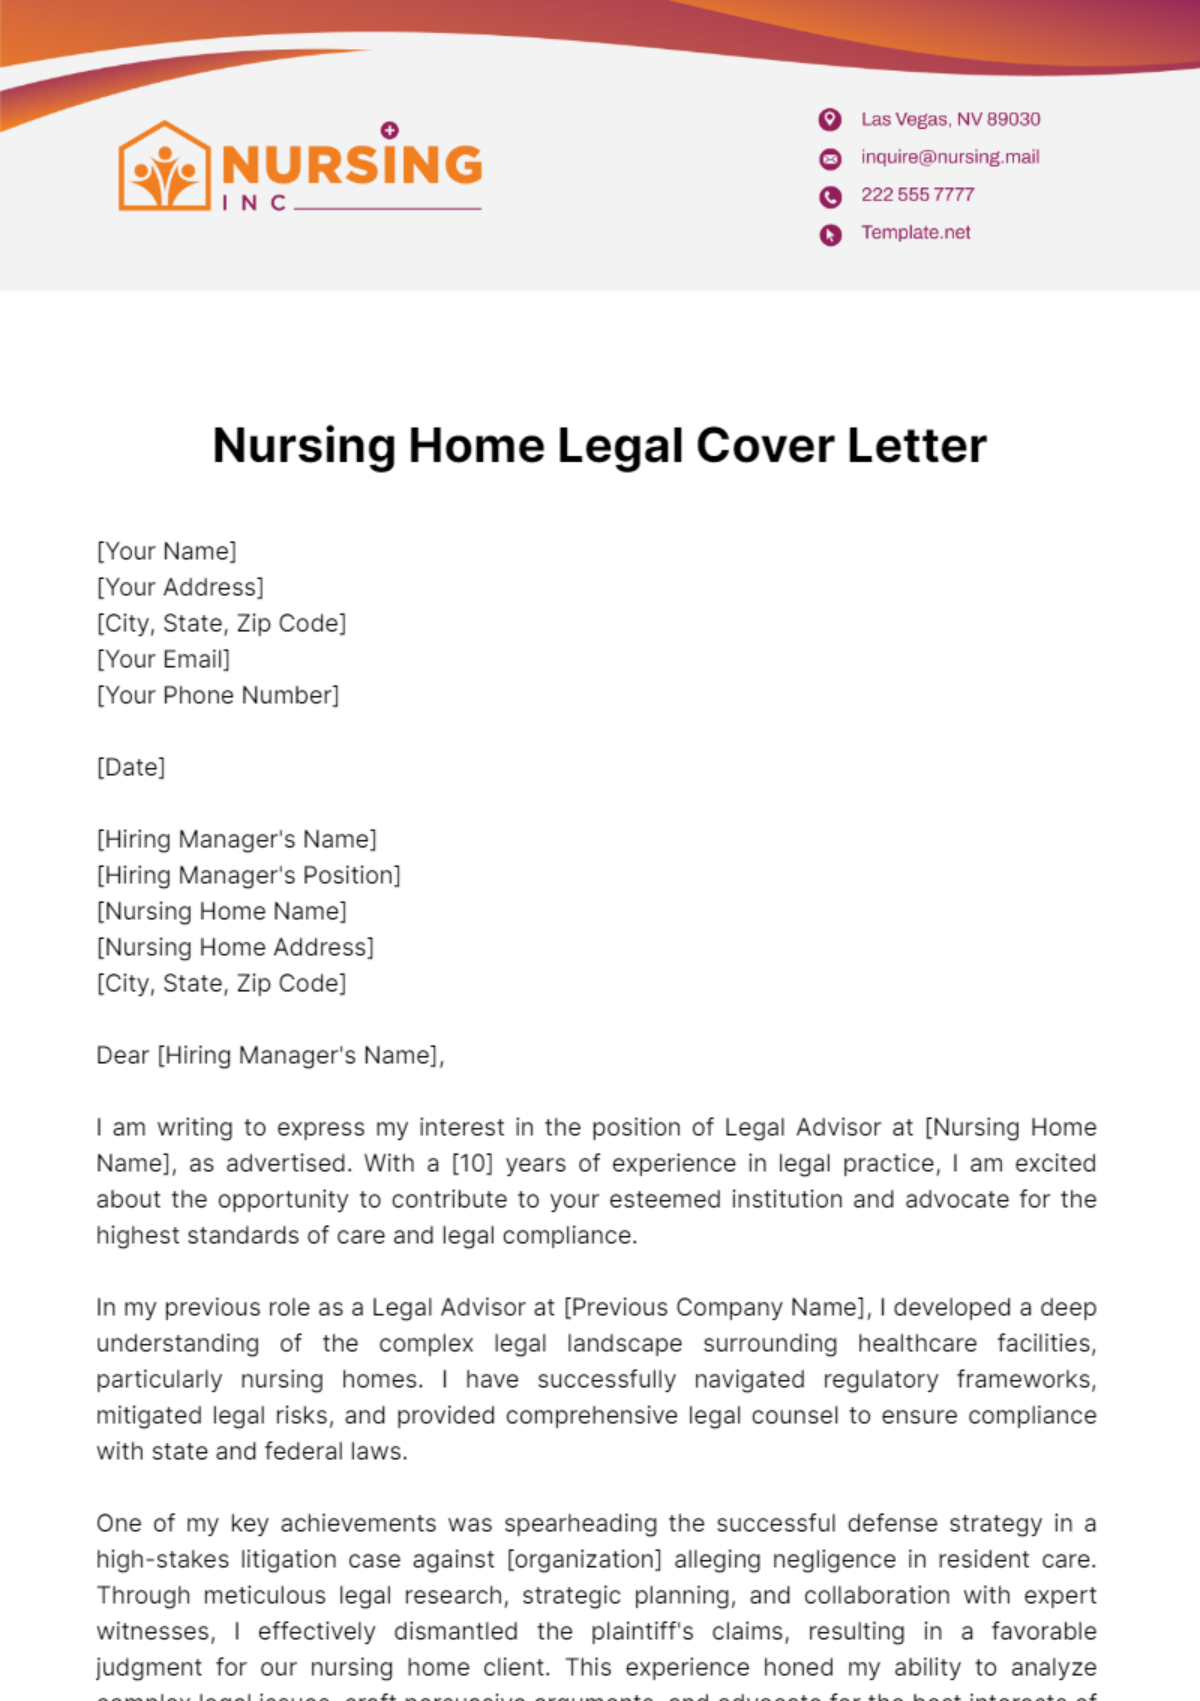 Nursing Home Legal Cover Letter Template